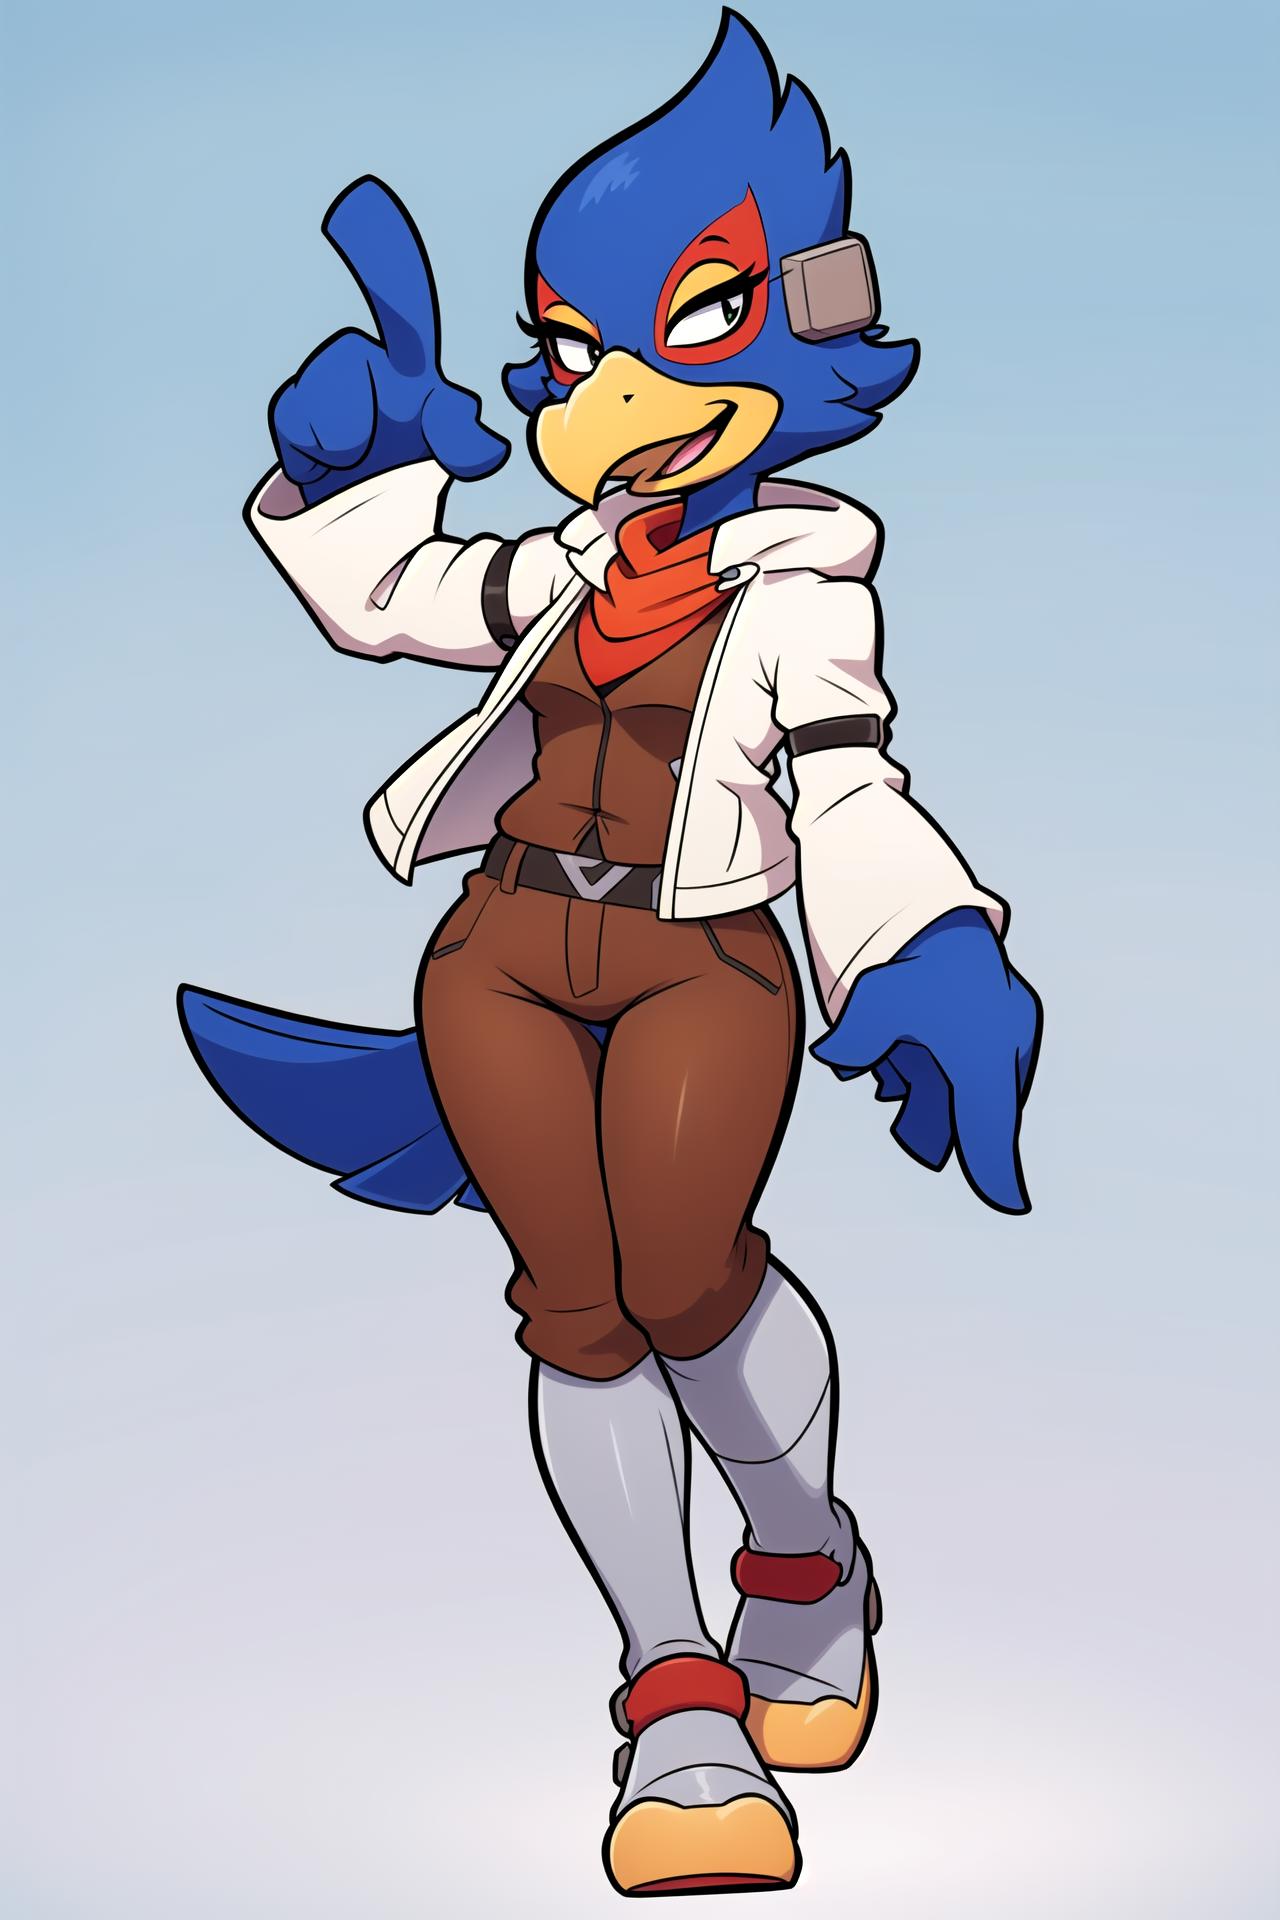 Falco (Star Fox) LoRA image by Puffin